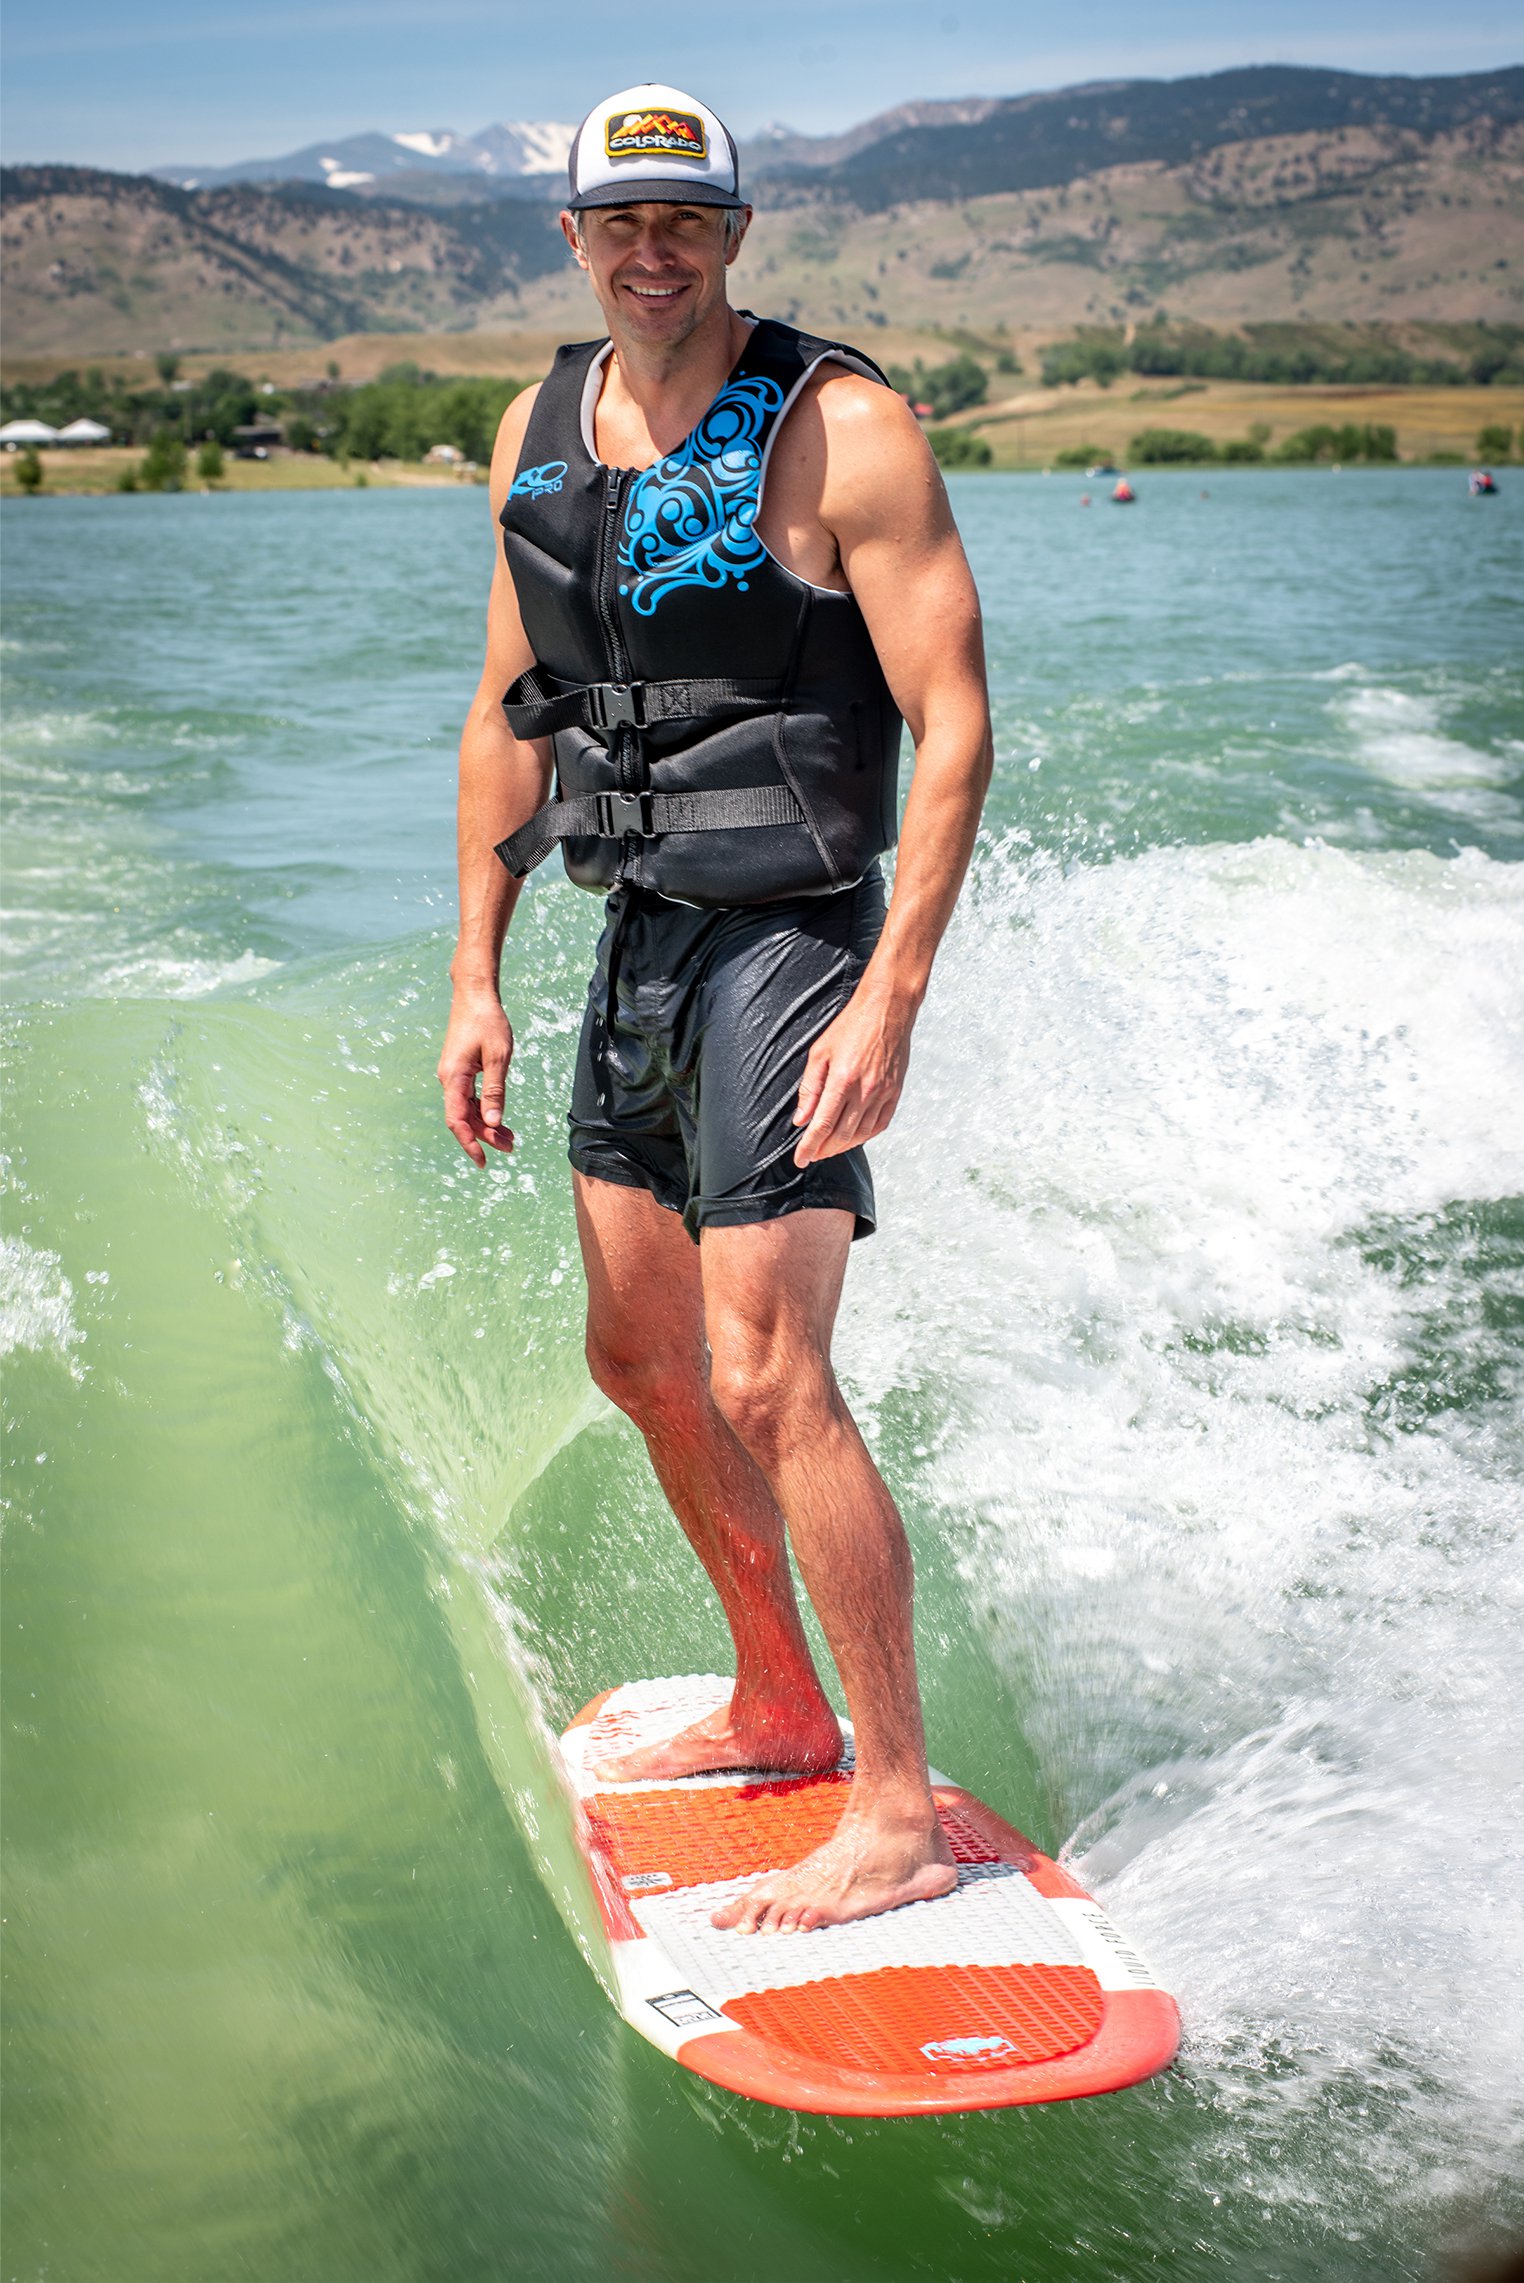 Man standing on a surfboard